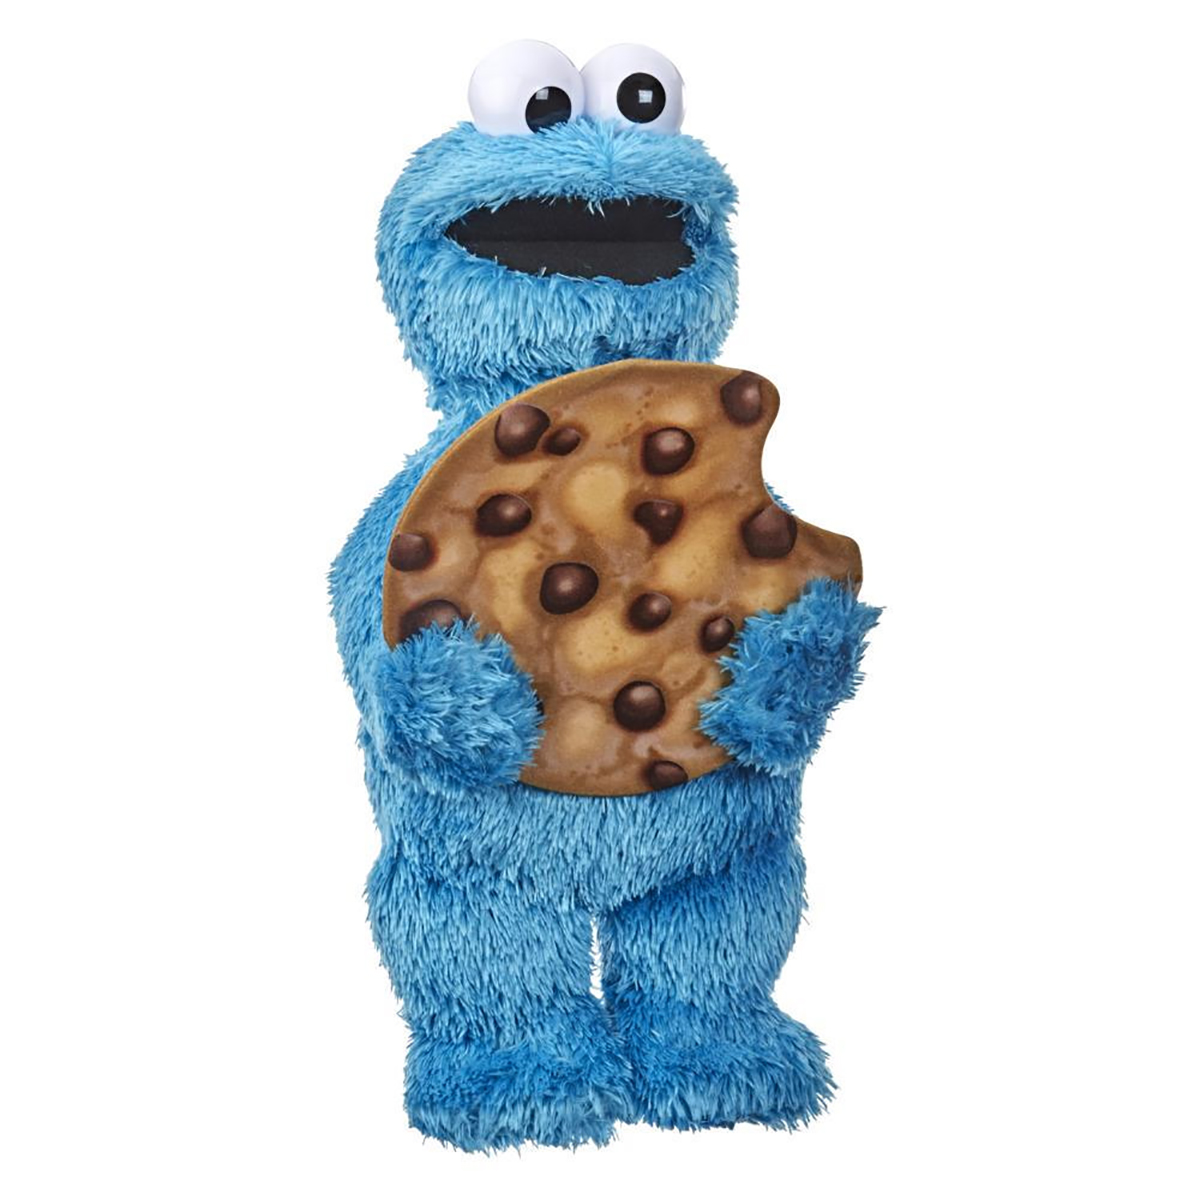 Playskool Sesame Street Peekaboo Cookie Monster Plush Toy